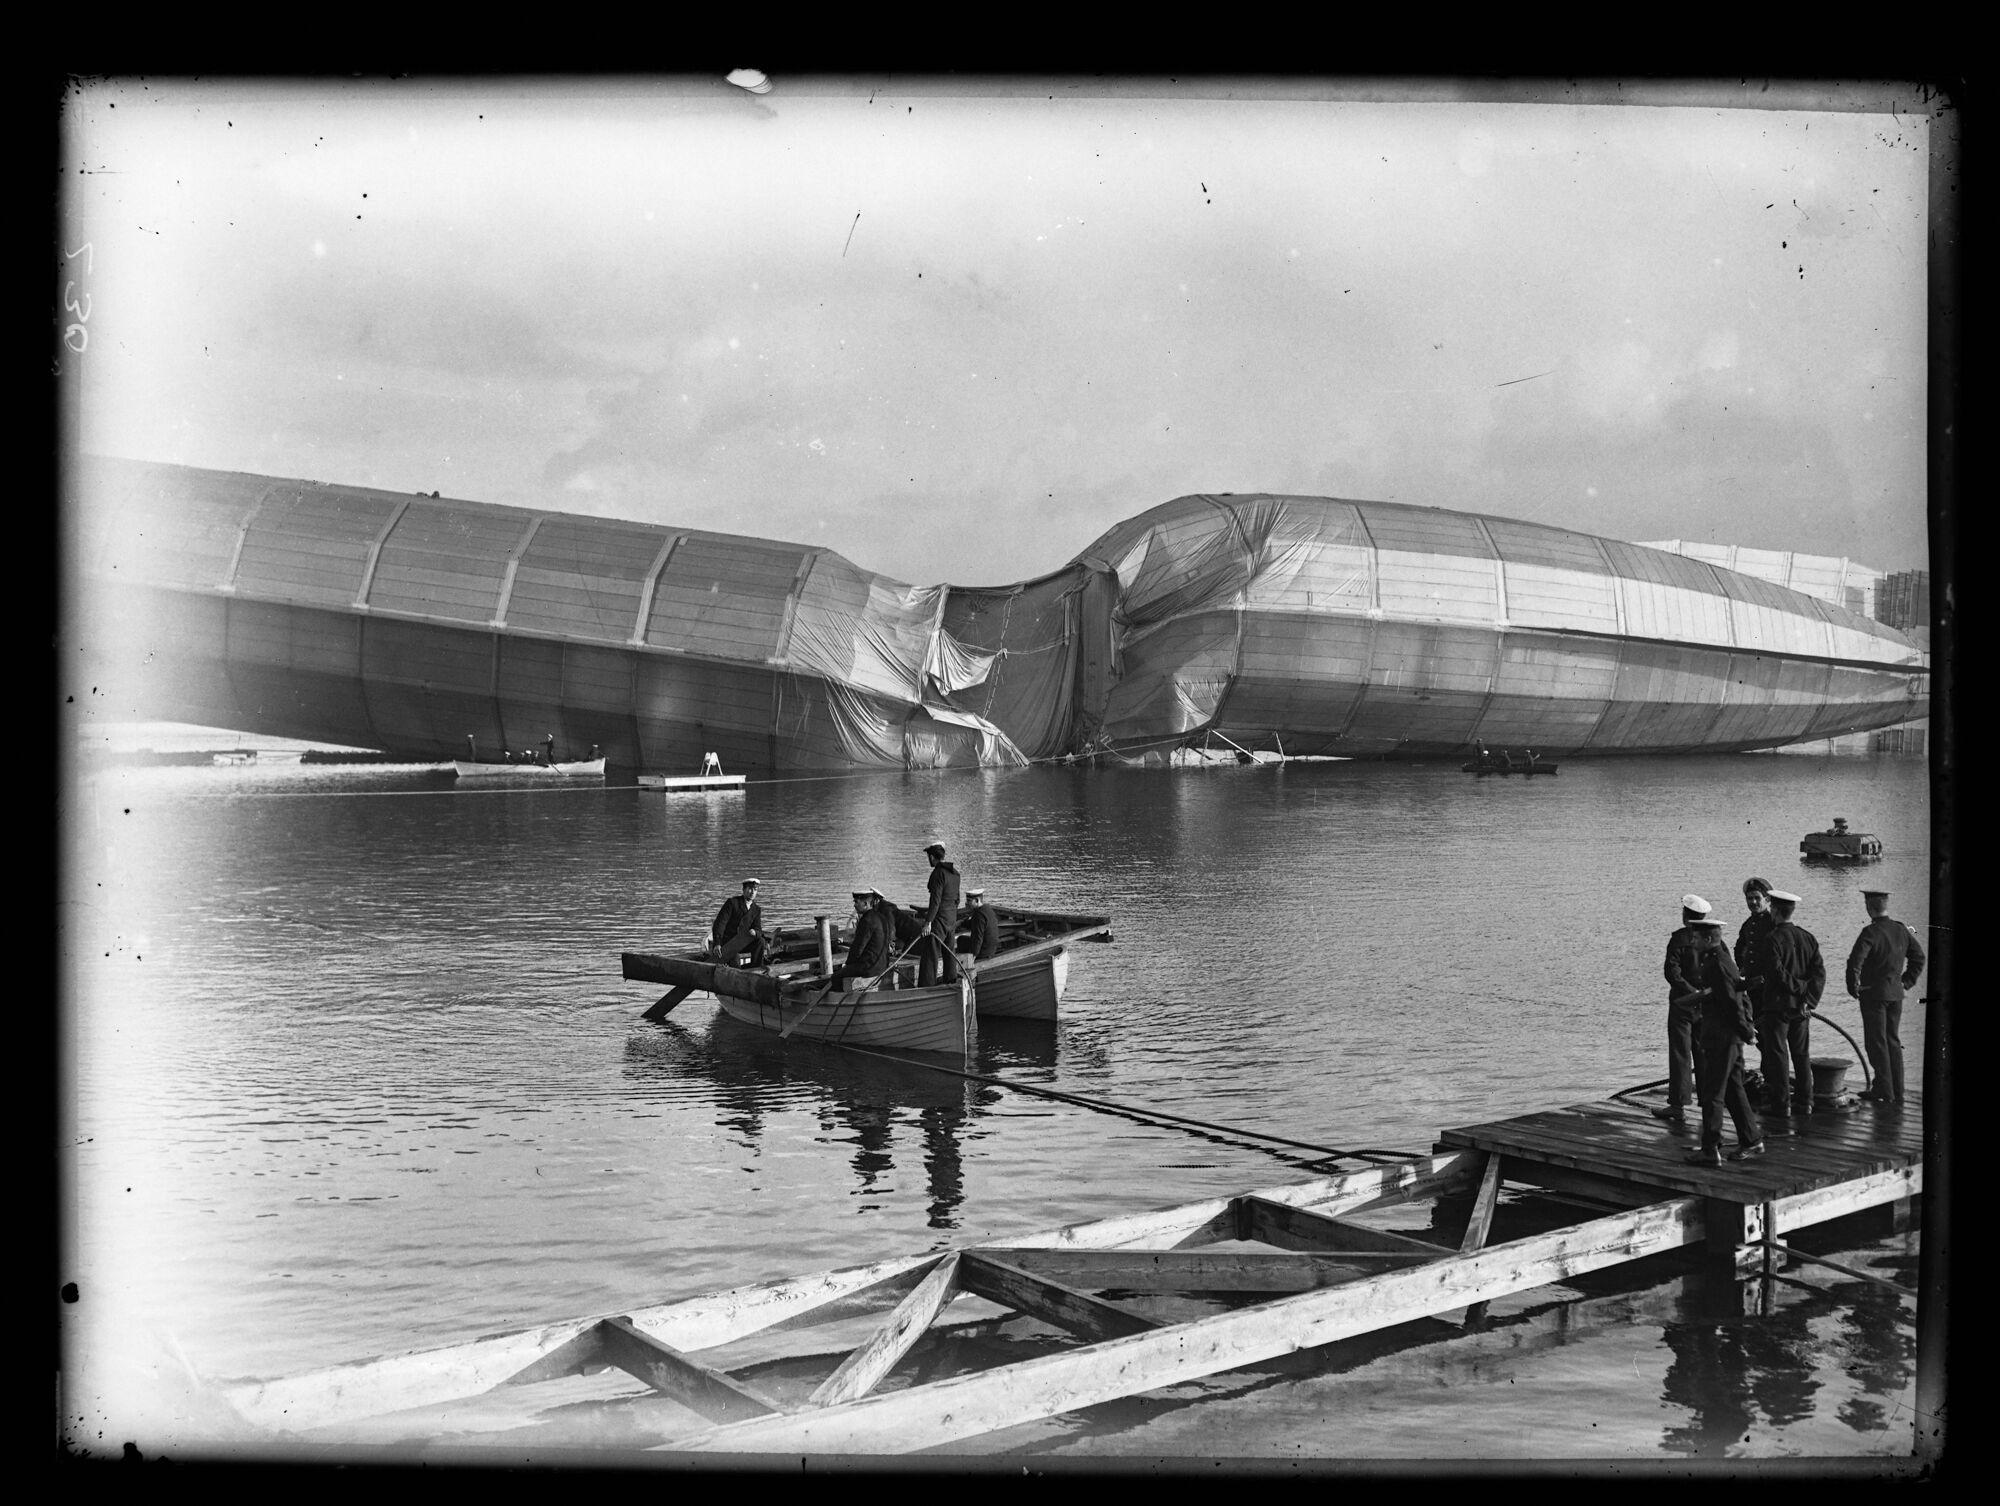 Naval Airship Wreck, Cavendish Dock, Barrow-in-Furness